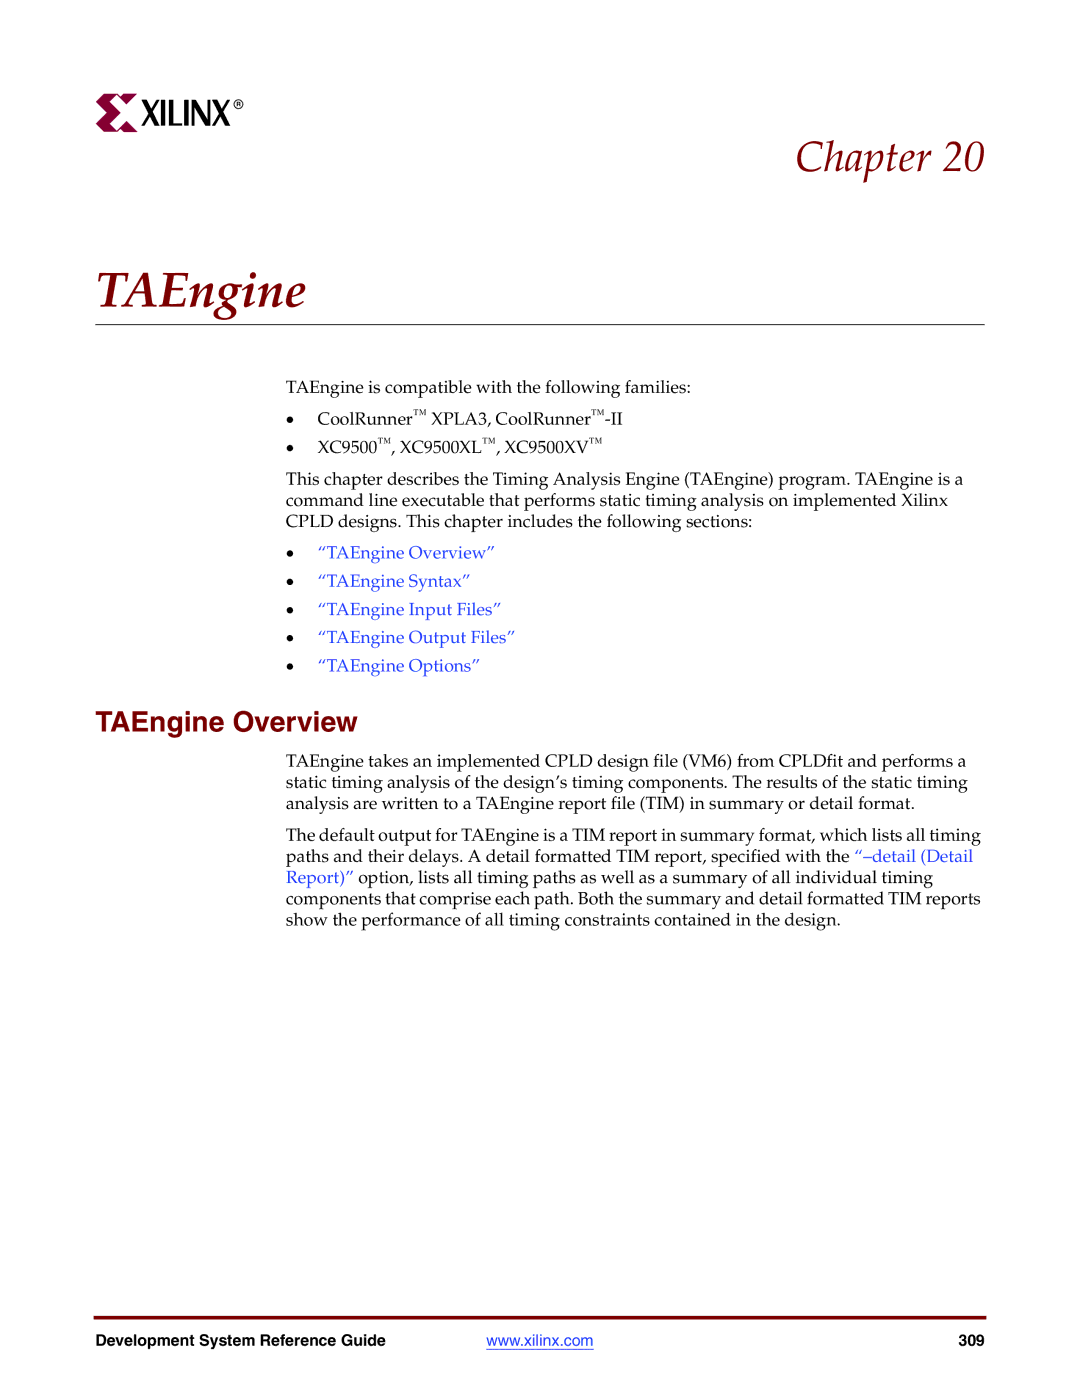 Xilinx 8.2i manual TAEngine Overview 